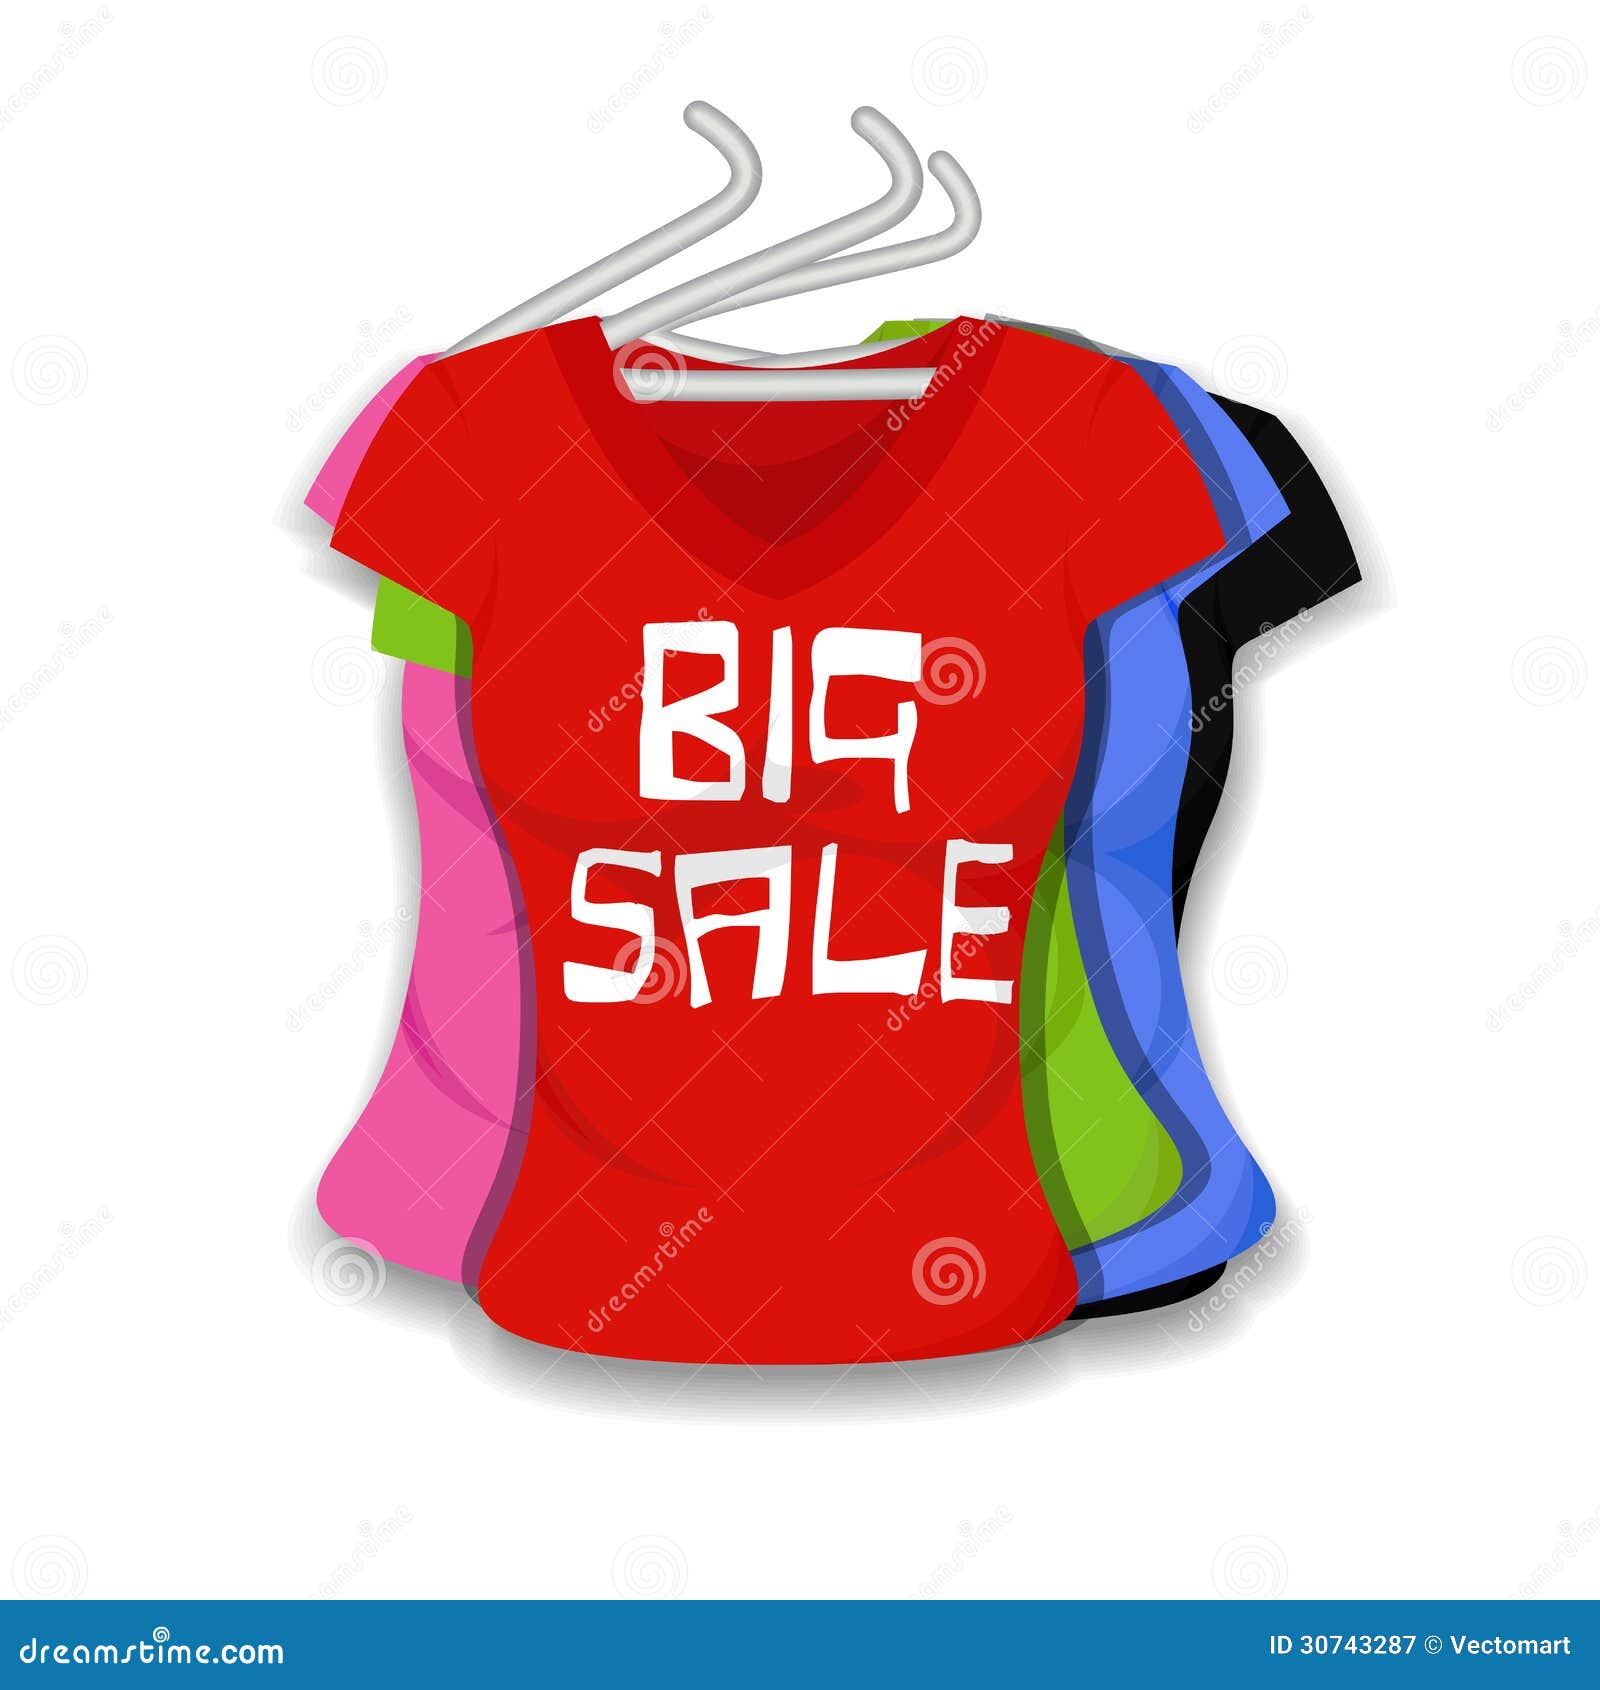 Big Sale on Apparel stock vector. Illustration of flyer - 30743287